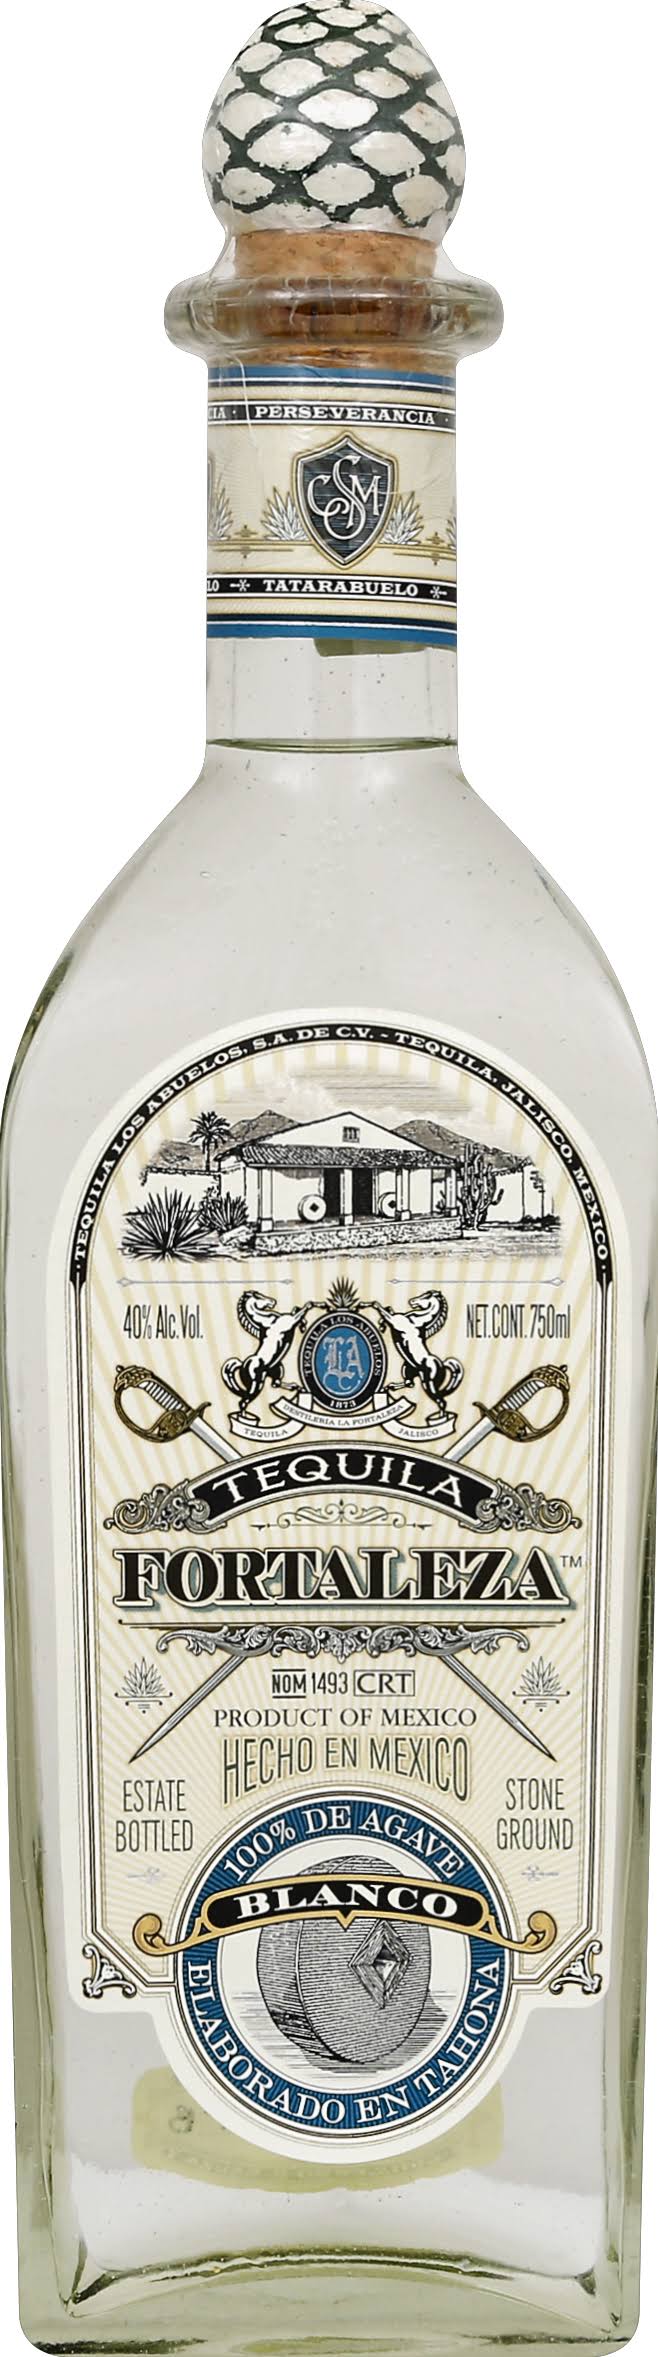 Fortaleza Blanco Tequila